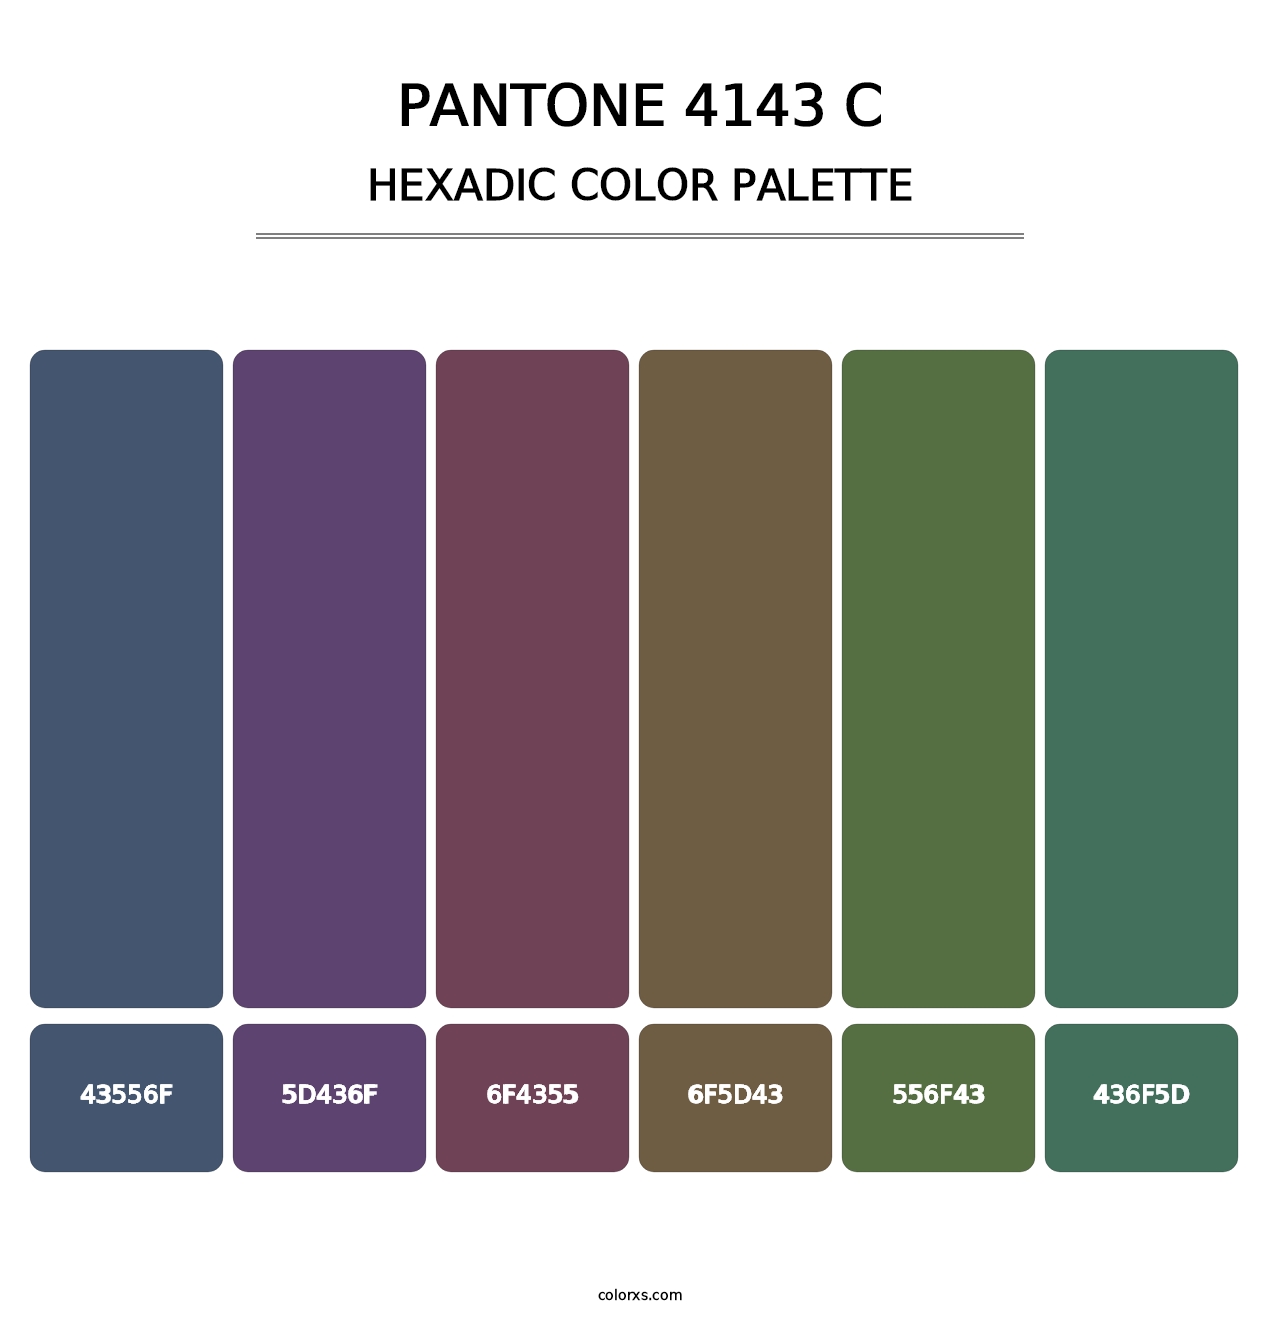 PANTONE 4143 C - Hexadic Color Palette